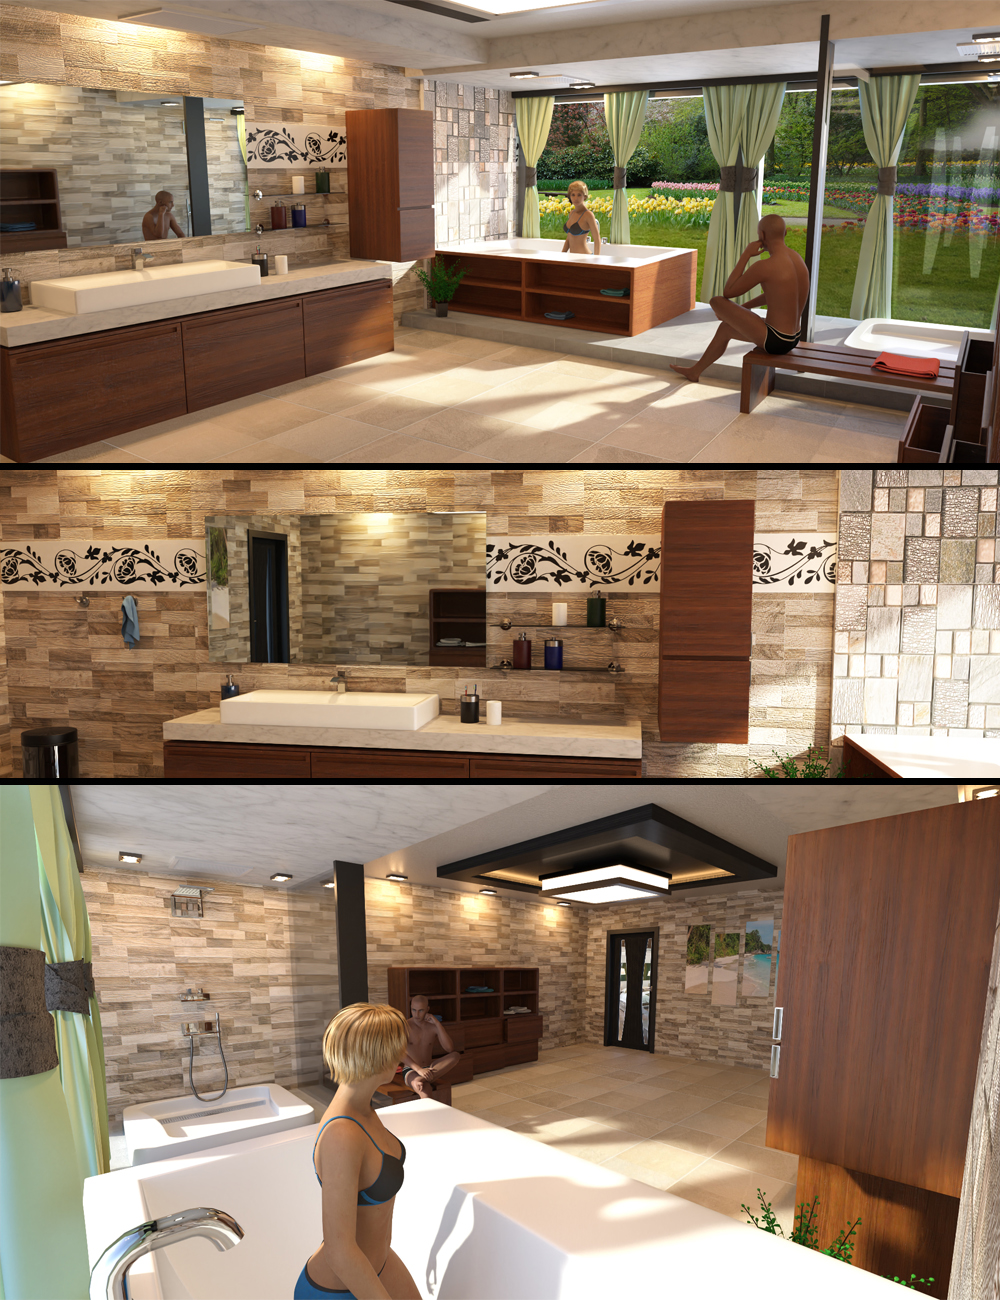 Gardenview Bathroom by: Tesla3dCorp, 3D Models by Daz 3D